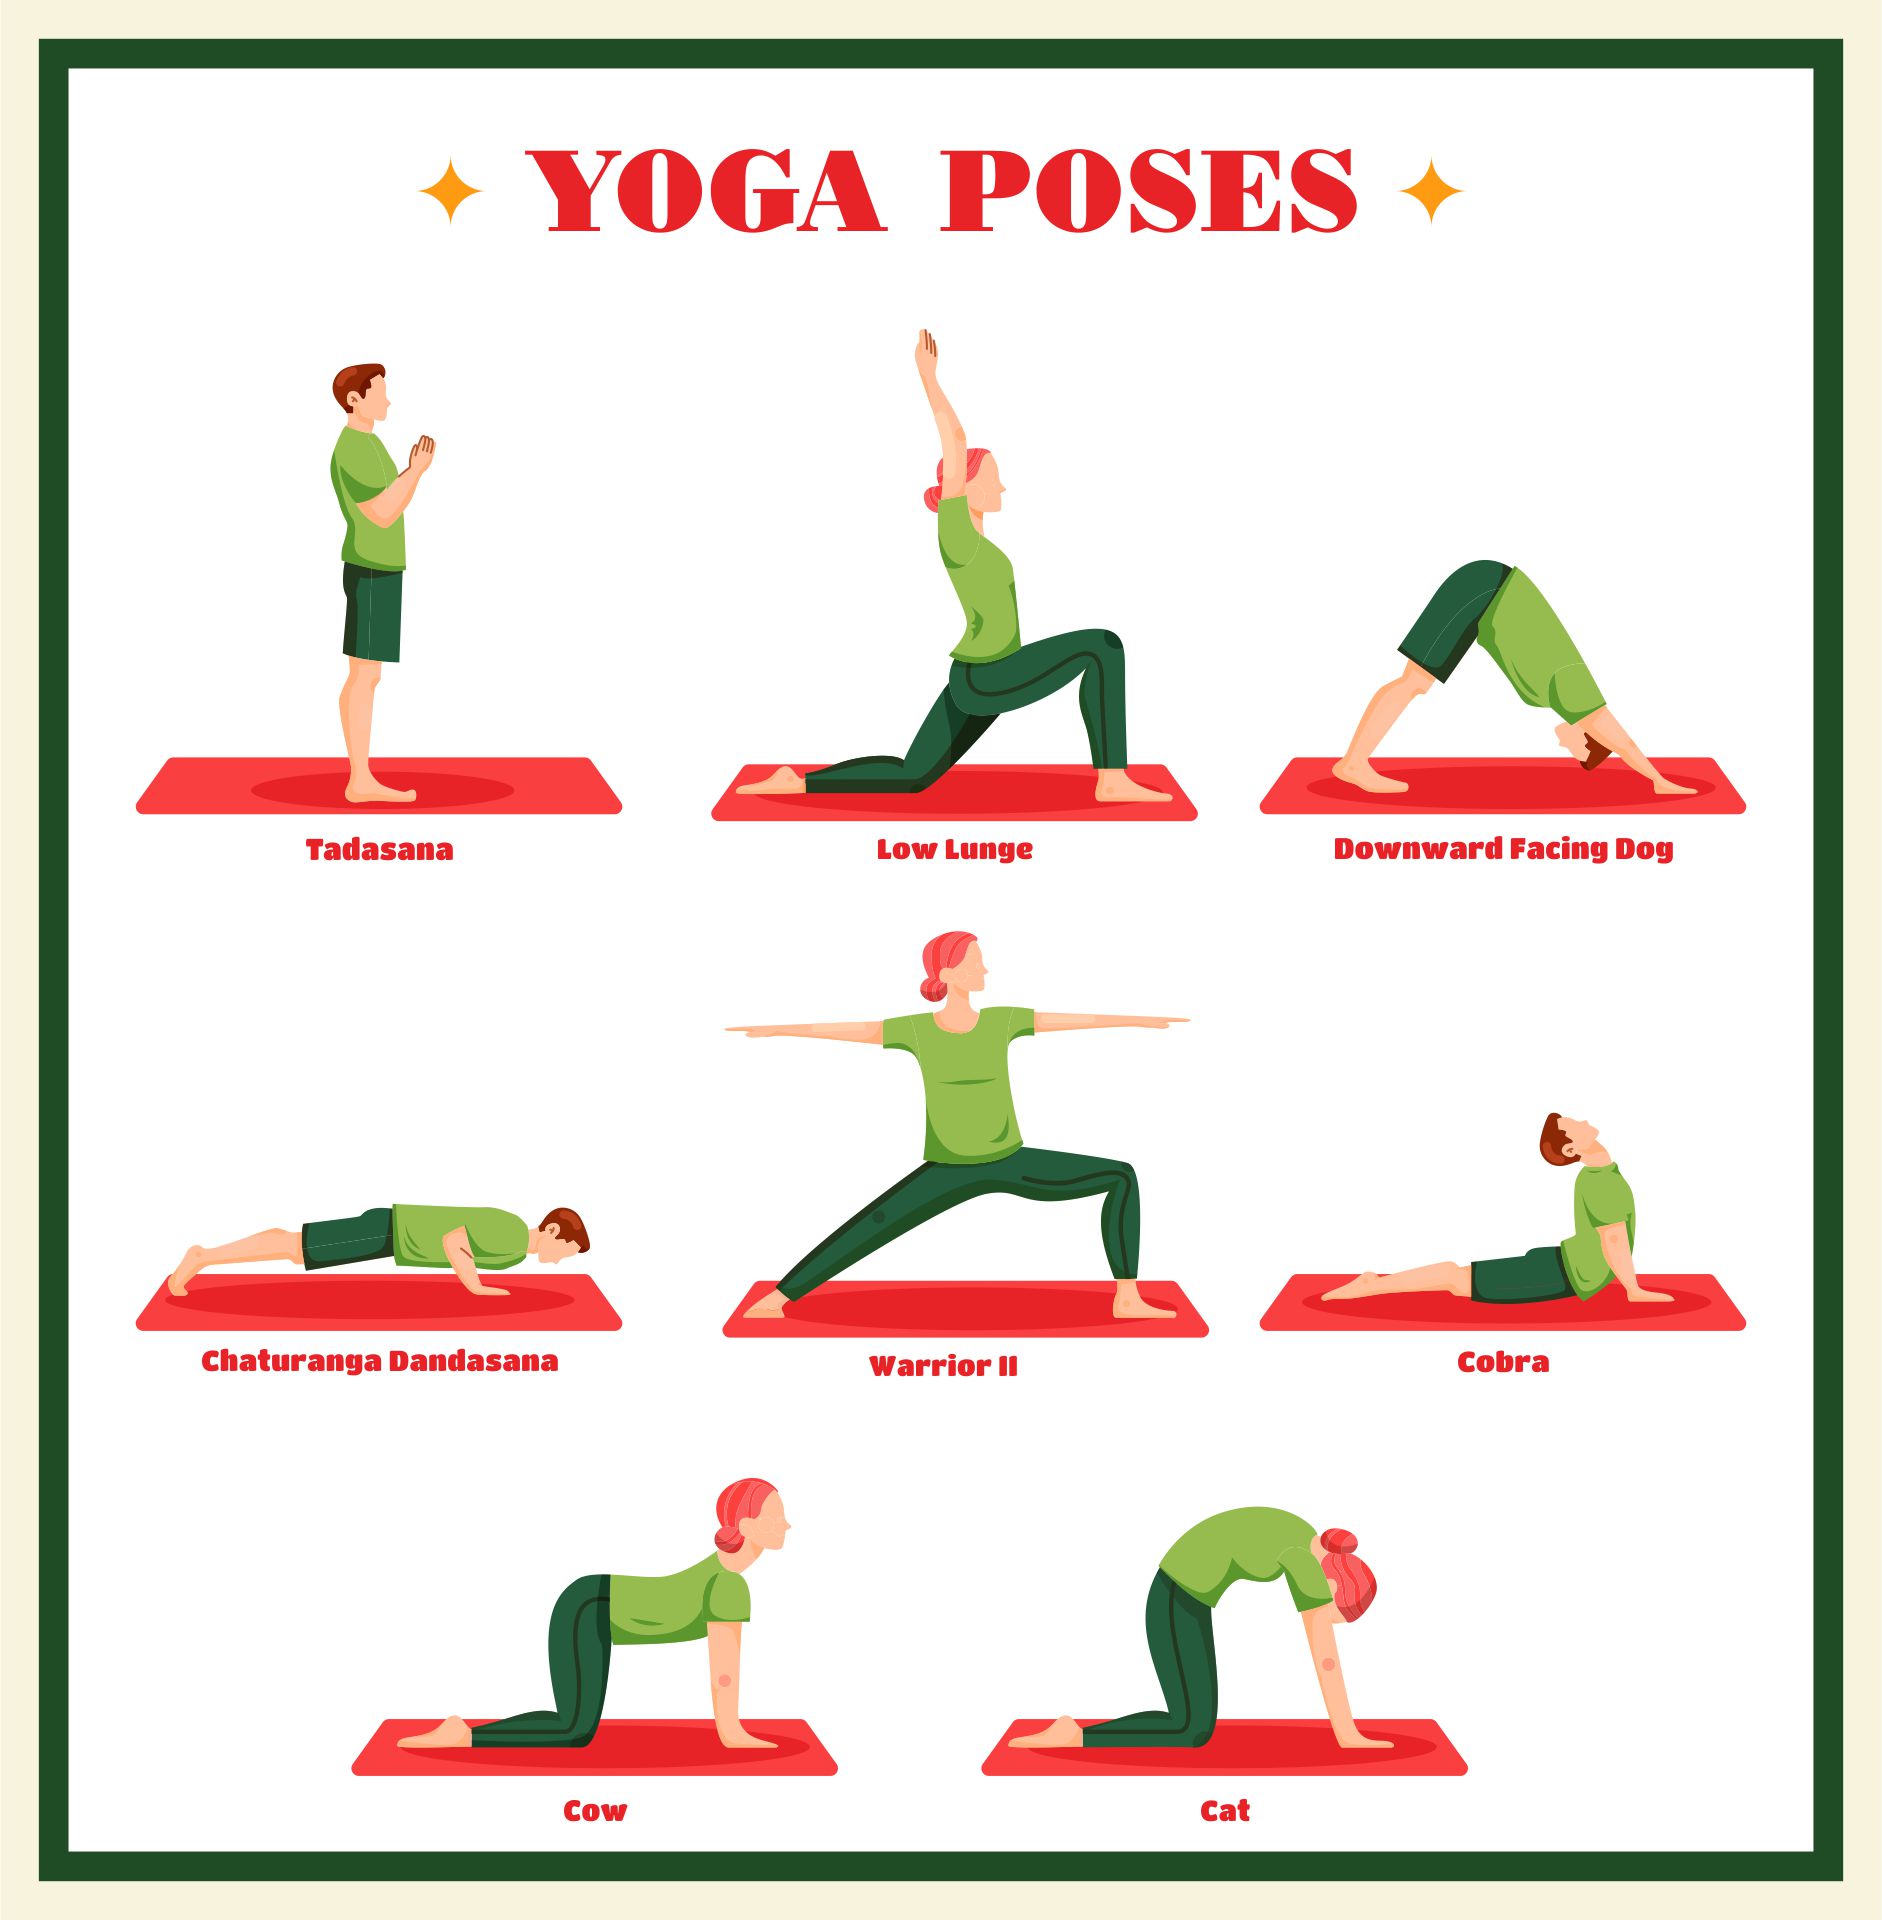 The 15 Best Standing Yoga Poses To Improve Balance & Stability |  mindbodygreen